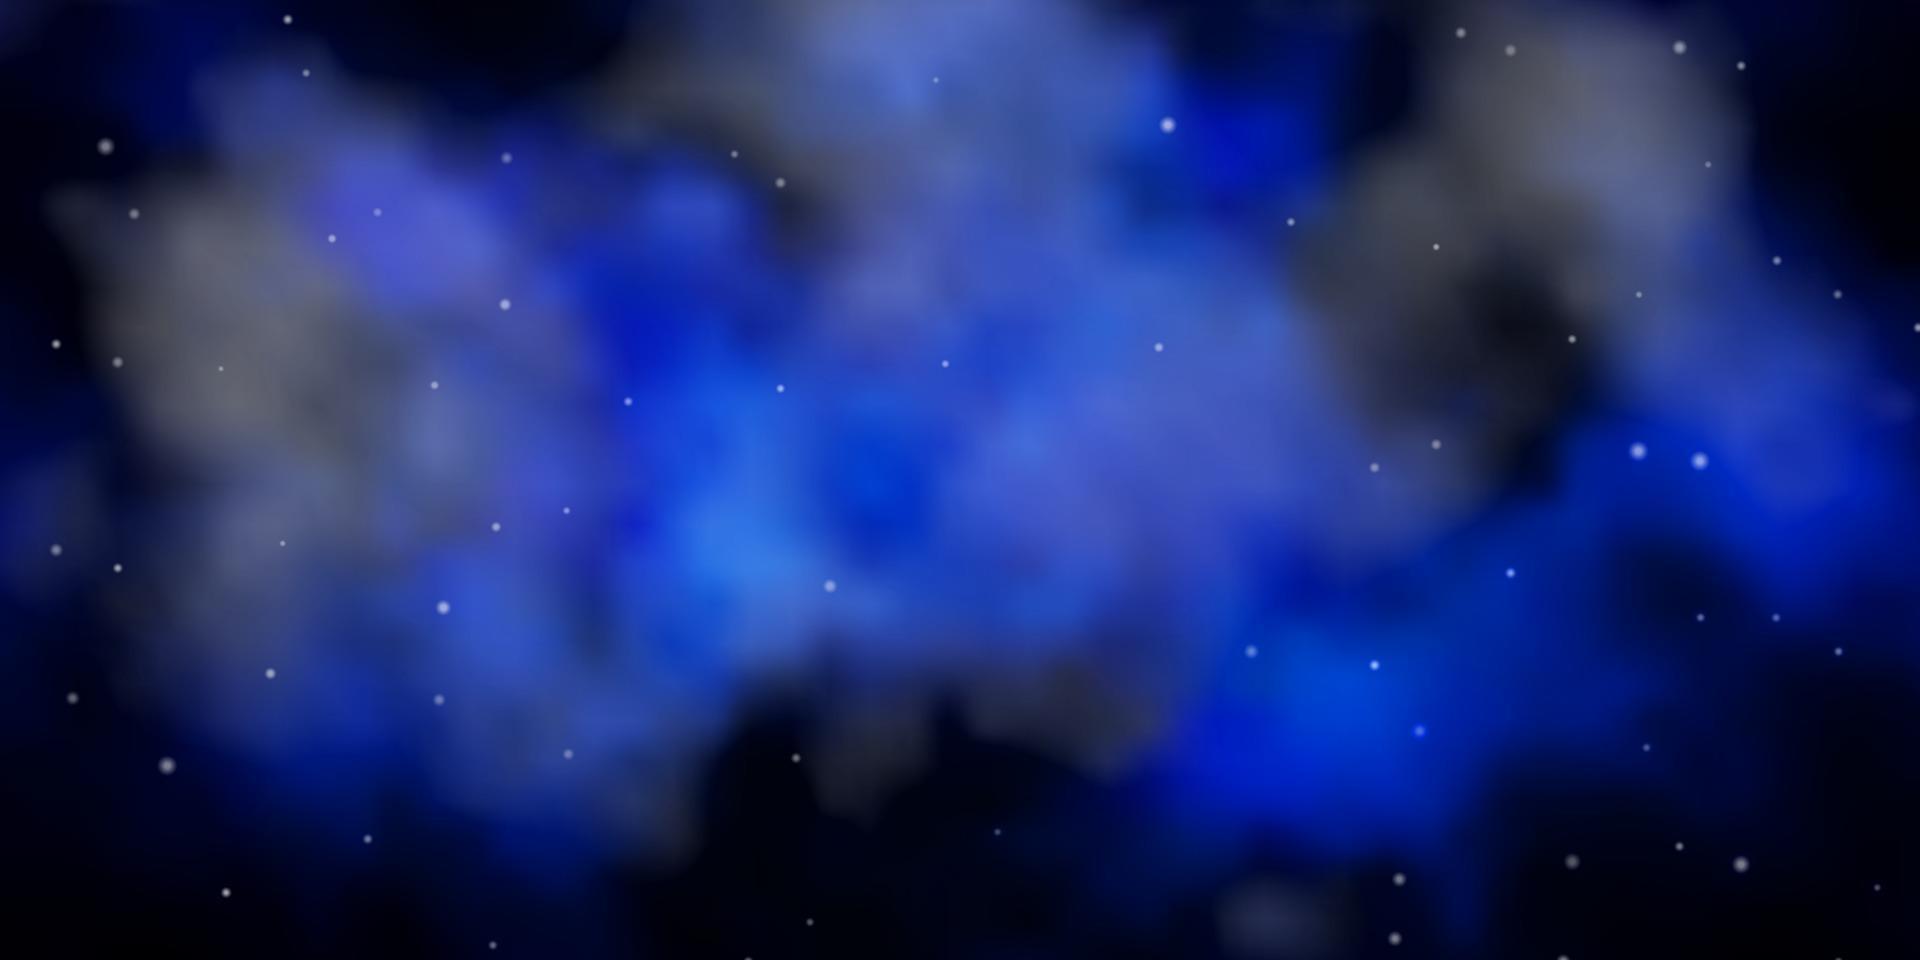 Fondo de vector azul oscuro con estrellas de colores.